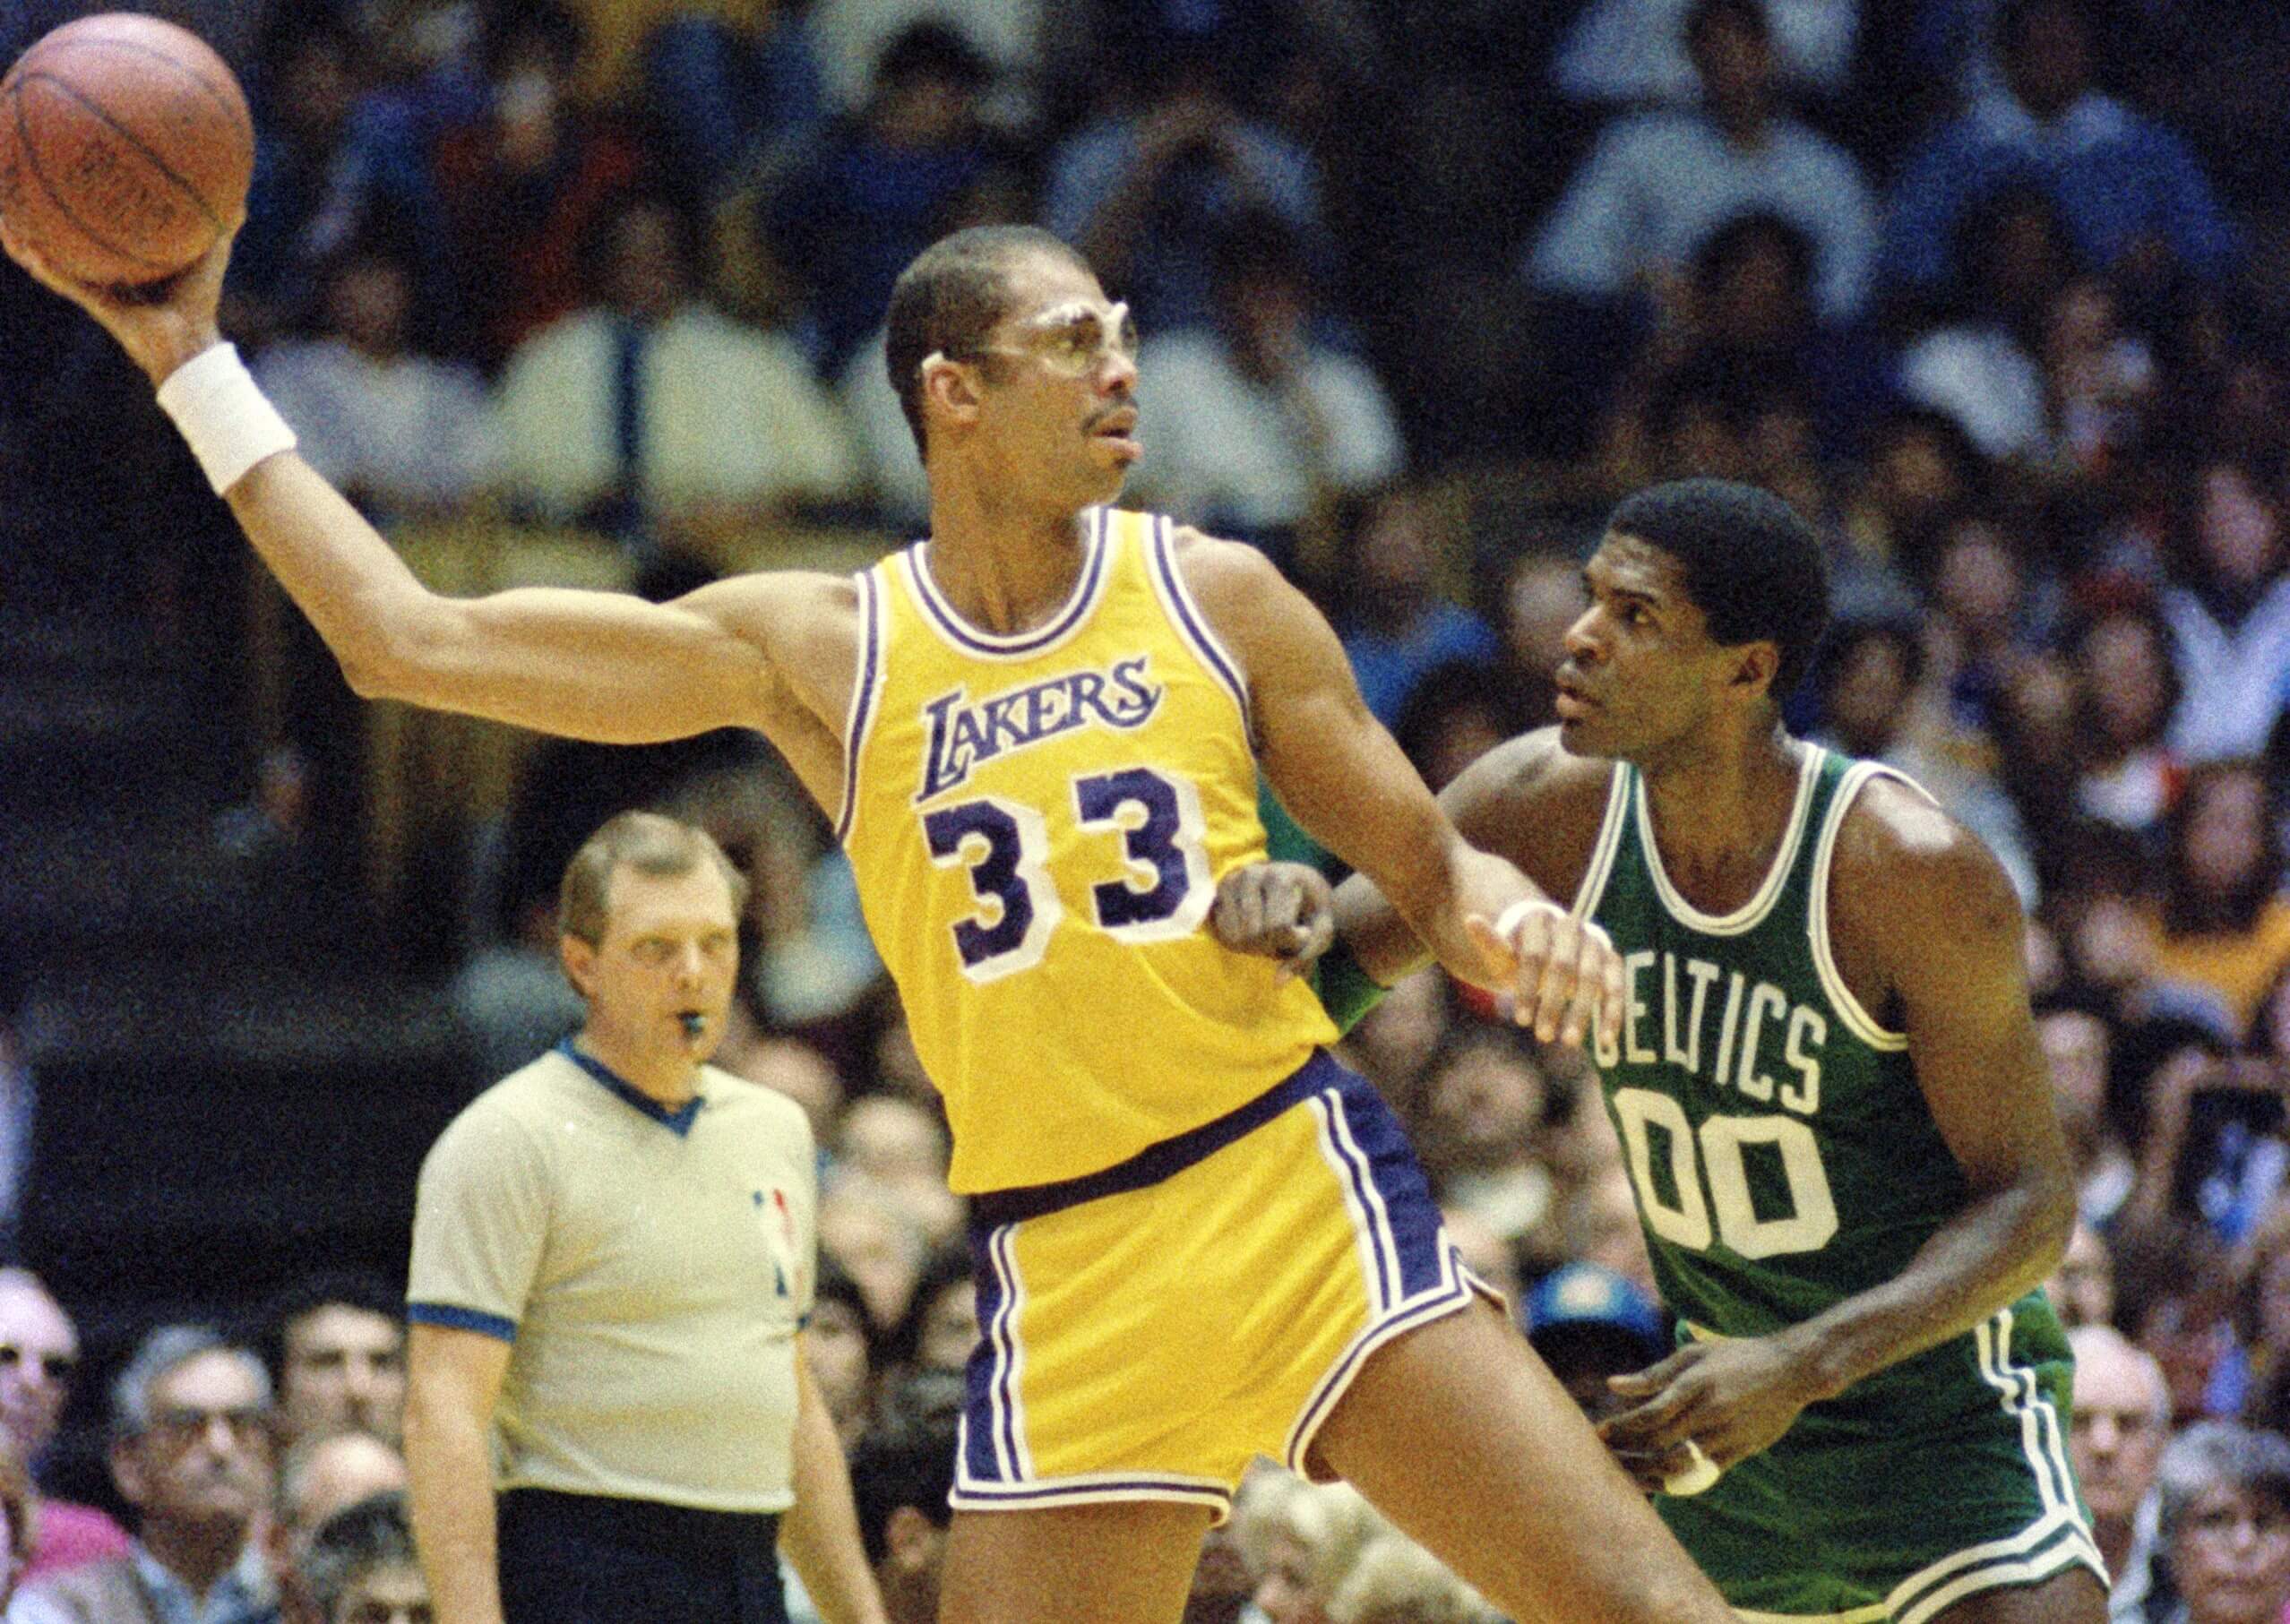 Los Angeles Lakers center Kareem Abdul-Jabbar readies to pass the ball as Robert Parish defends.